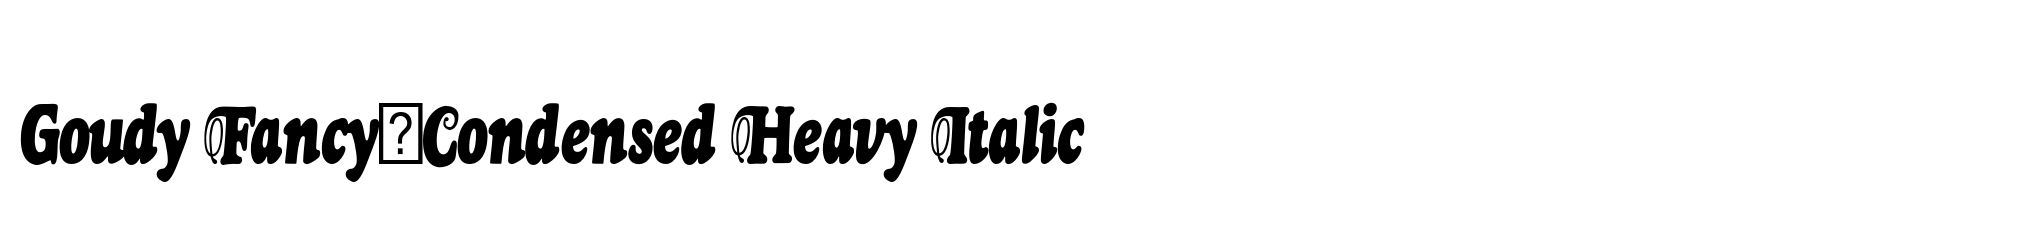 Goudy Fancy-Condensed Heavy Italic image